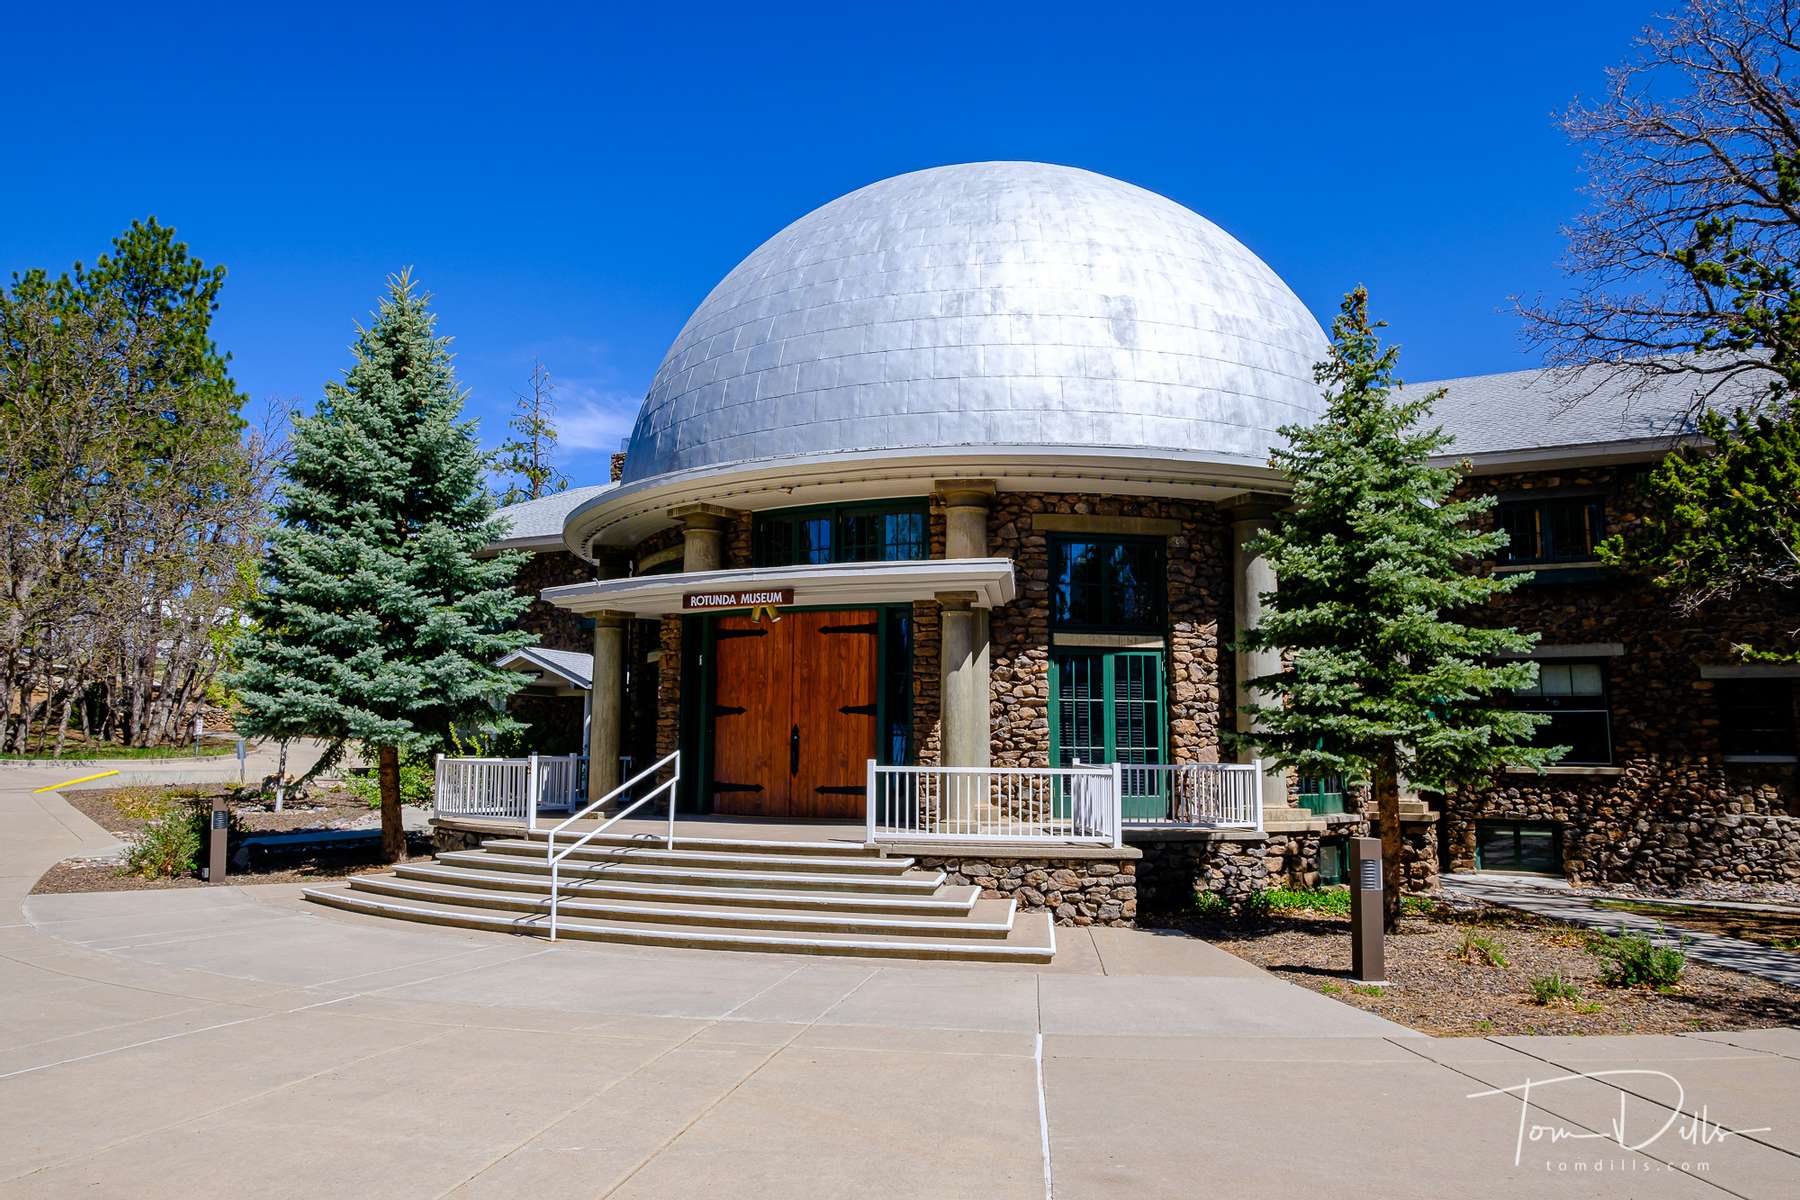 The Rotunda Museum at Lowell Observatory in Flagstaff, Arizona